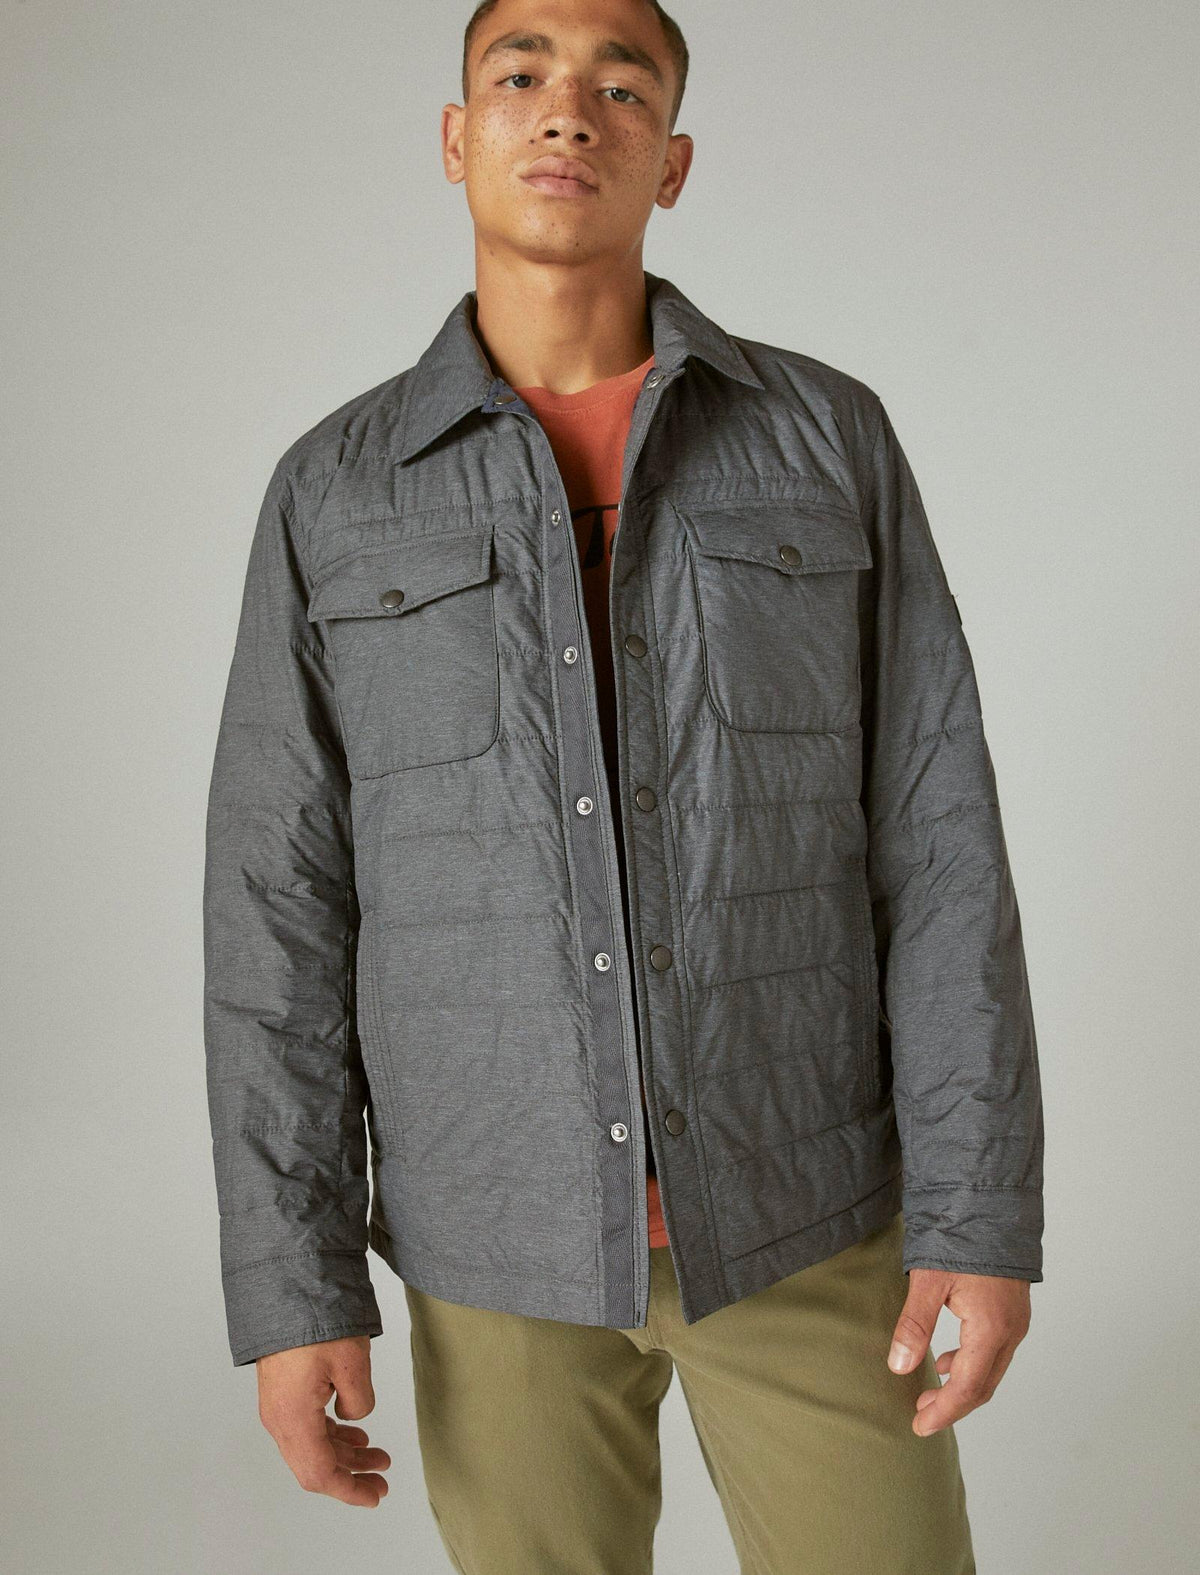 Lucky Brand Nylon Reversible Puffer Shirt Jacket - Men's Clothing Outerwear Jackets Coats Navy Charcoal Multi